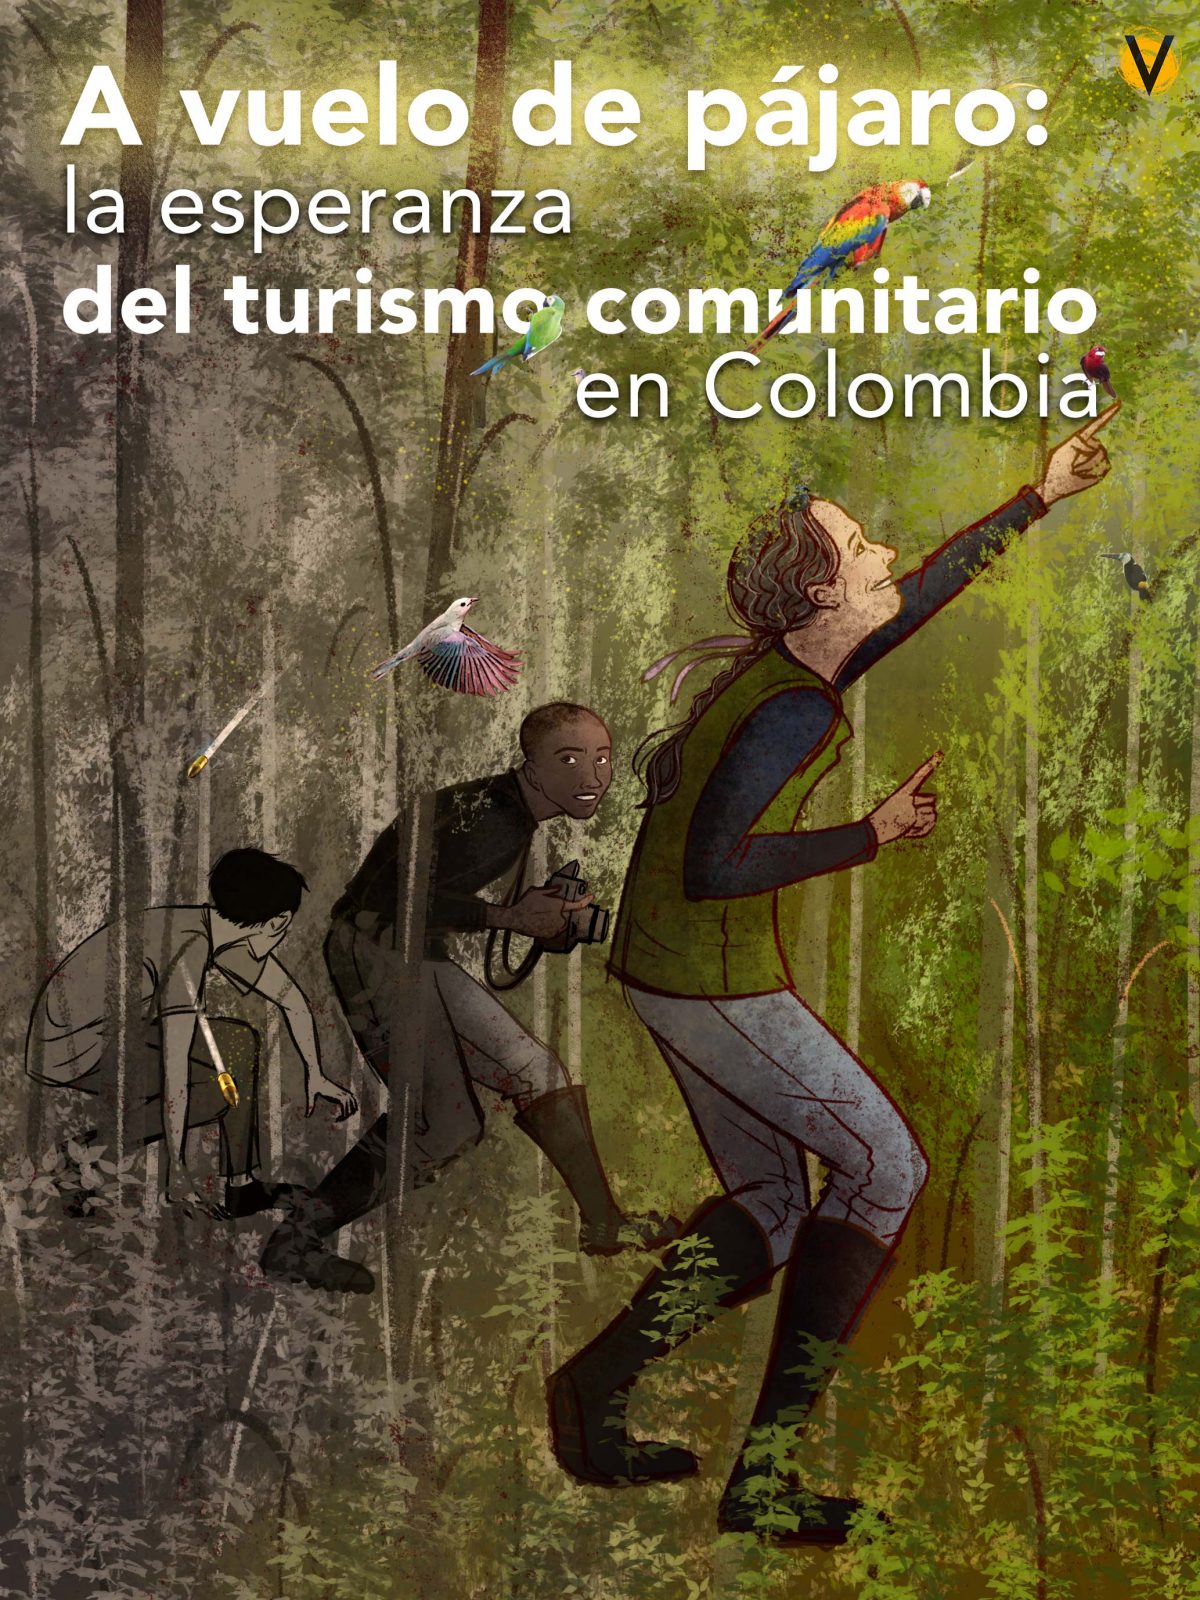 Miraflores-1-Guaviare-Avistamiento-de-Aves-Colombia-Goami-Turismo-Comunitario